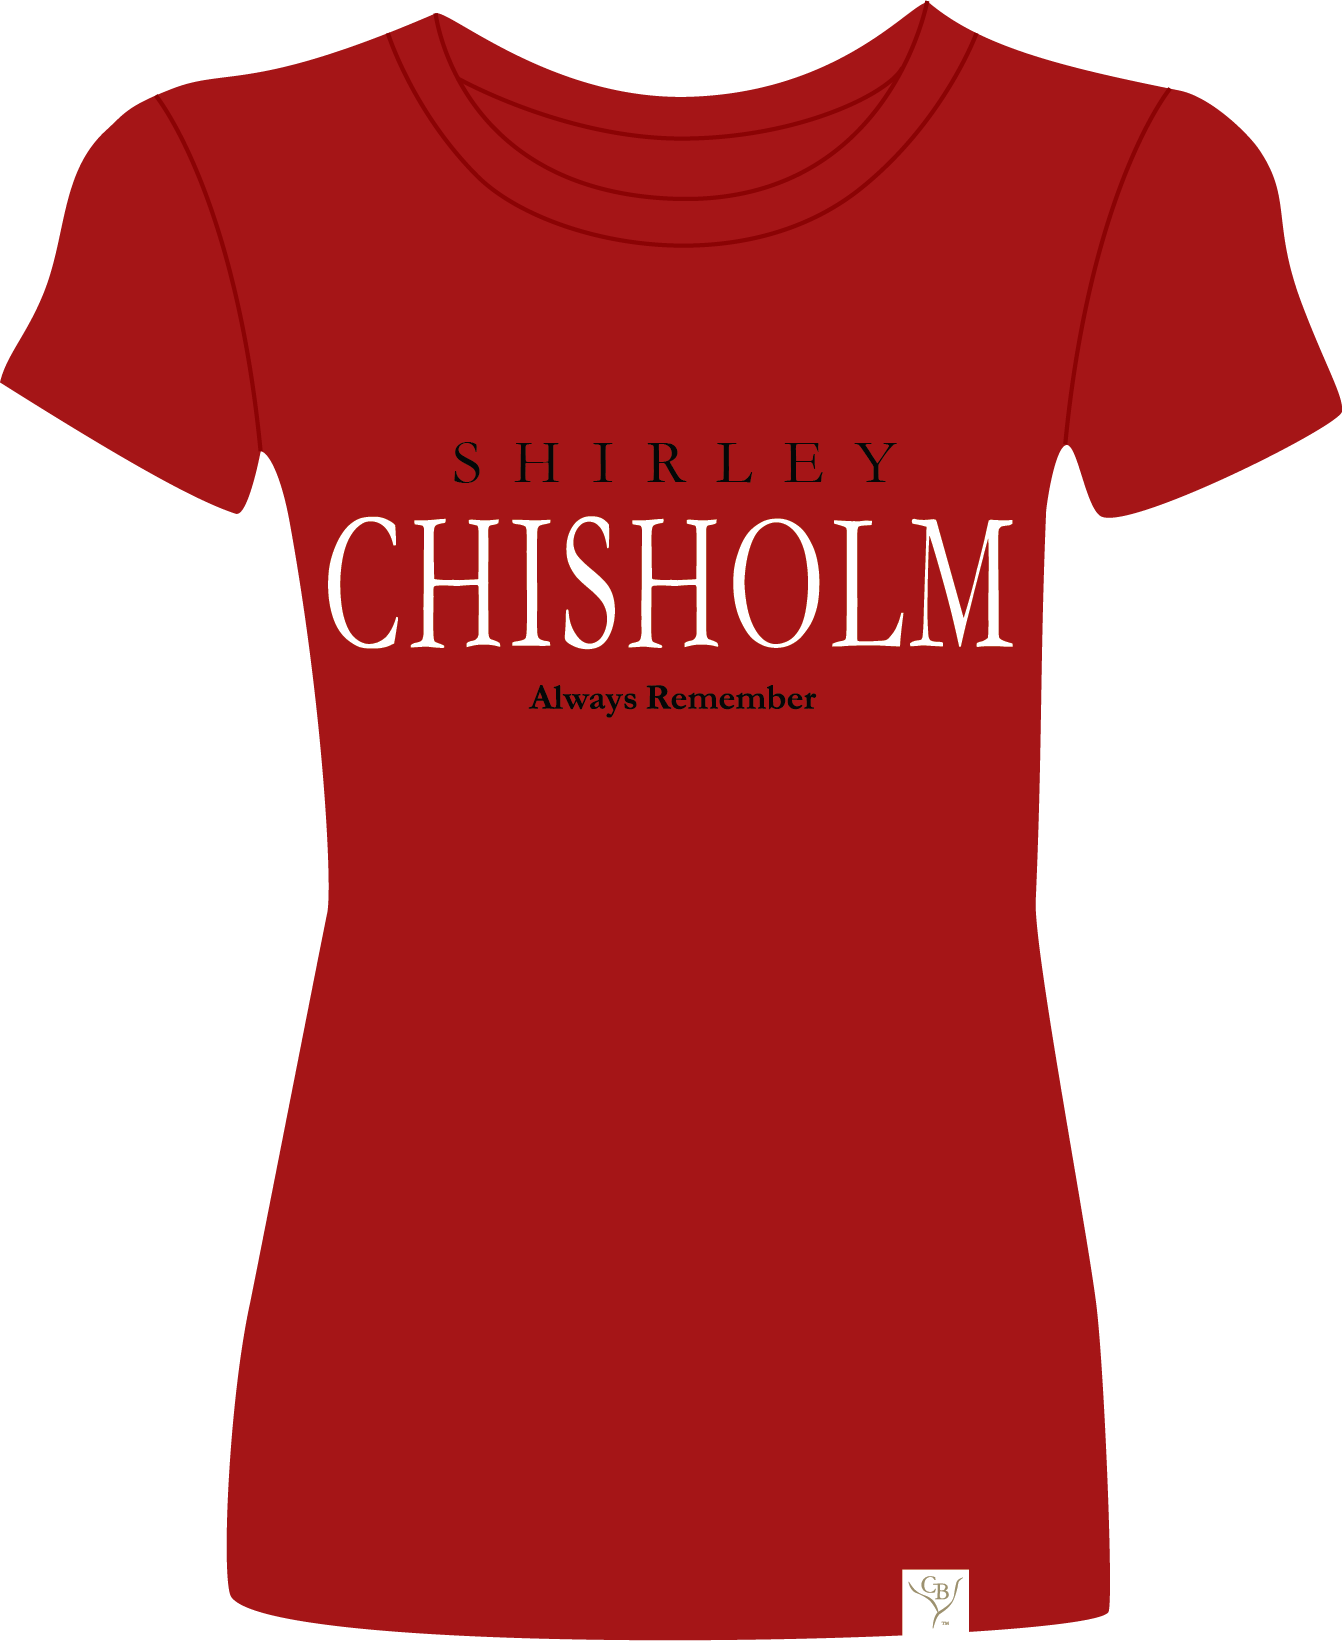 The Chisholm 9